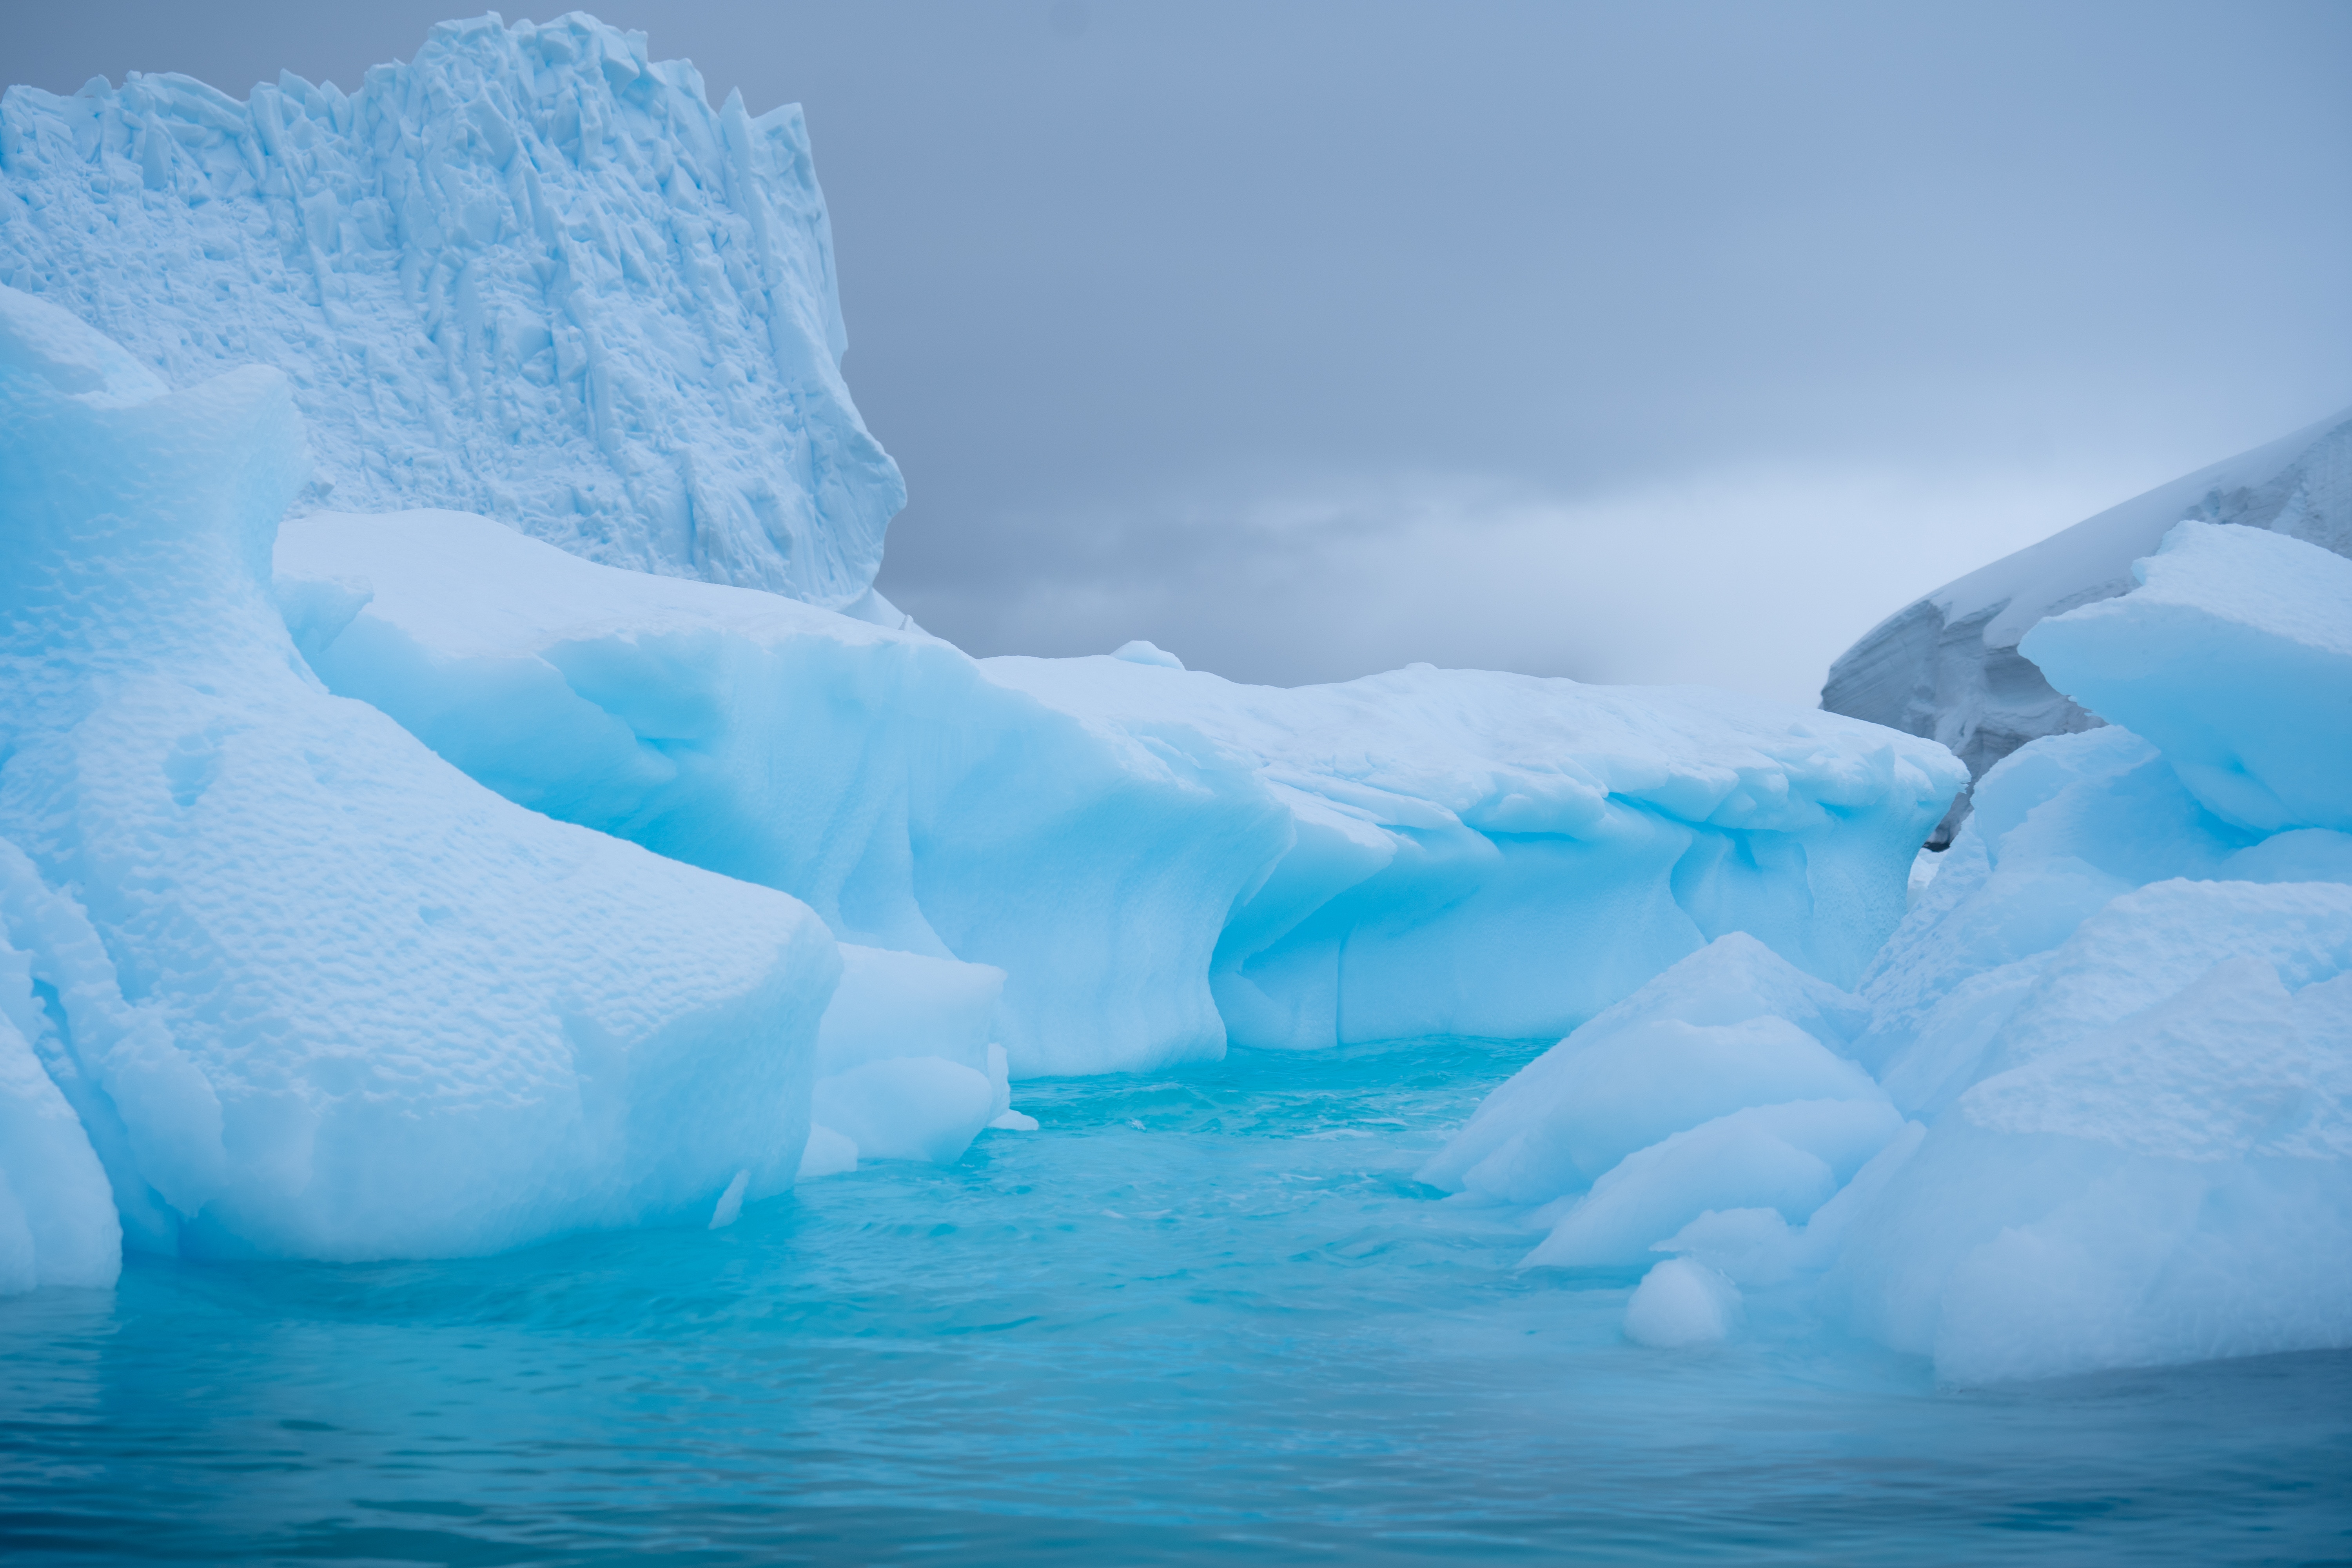 antarctica, glacier, water, nature, ice, snow, antarctic cell phone wallpapers